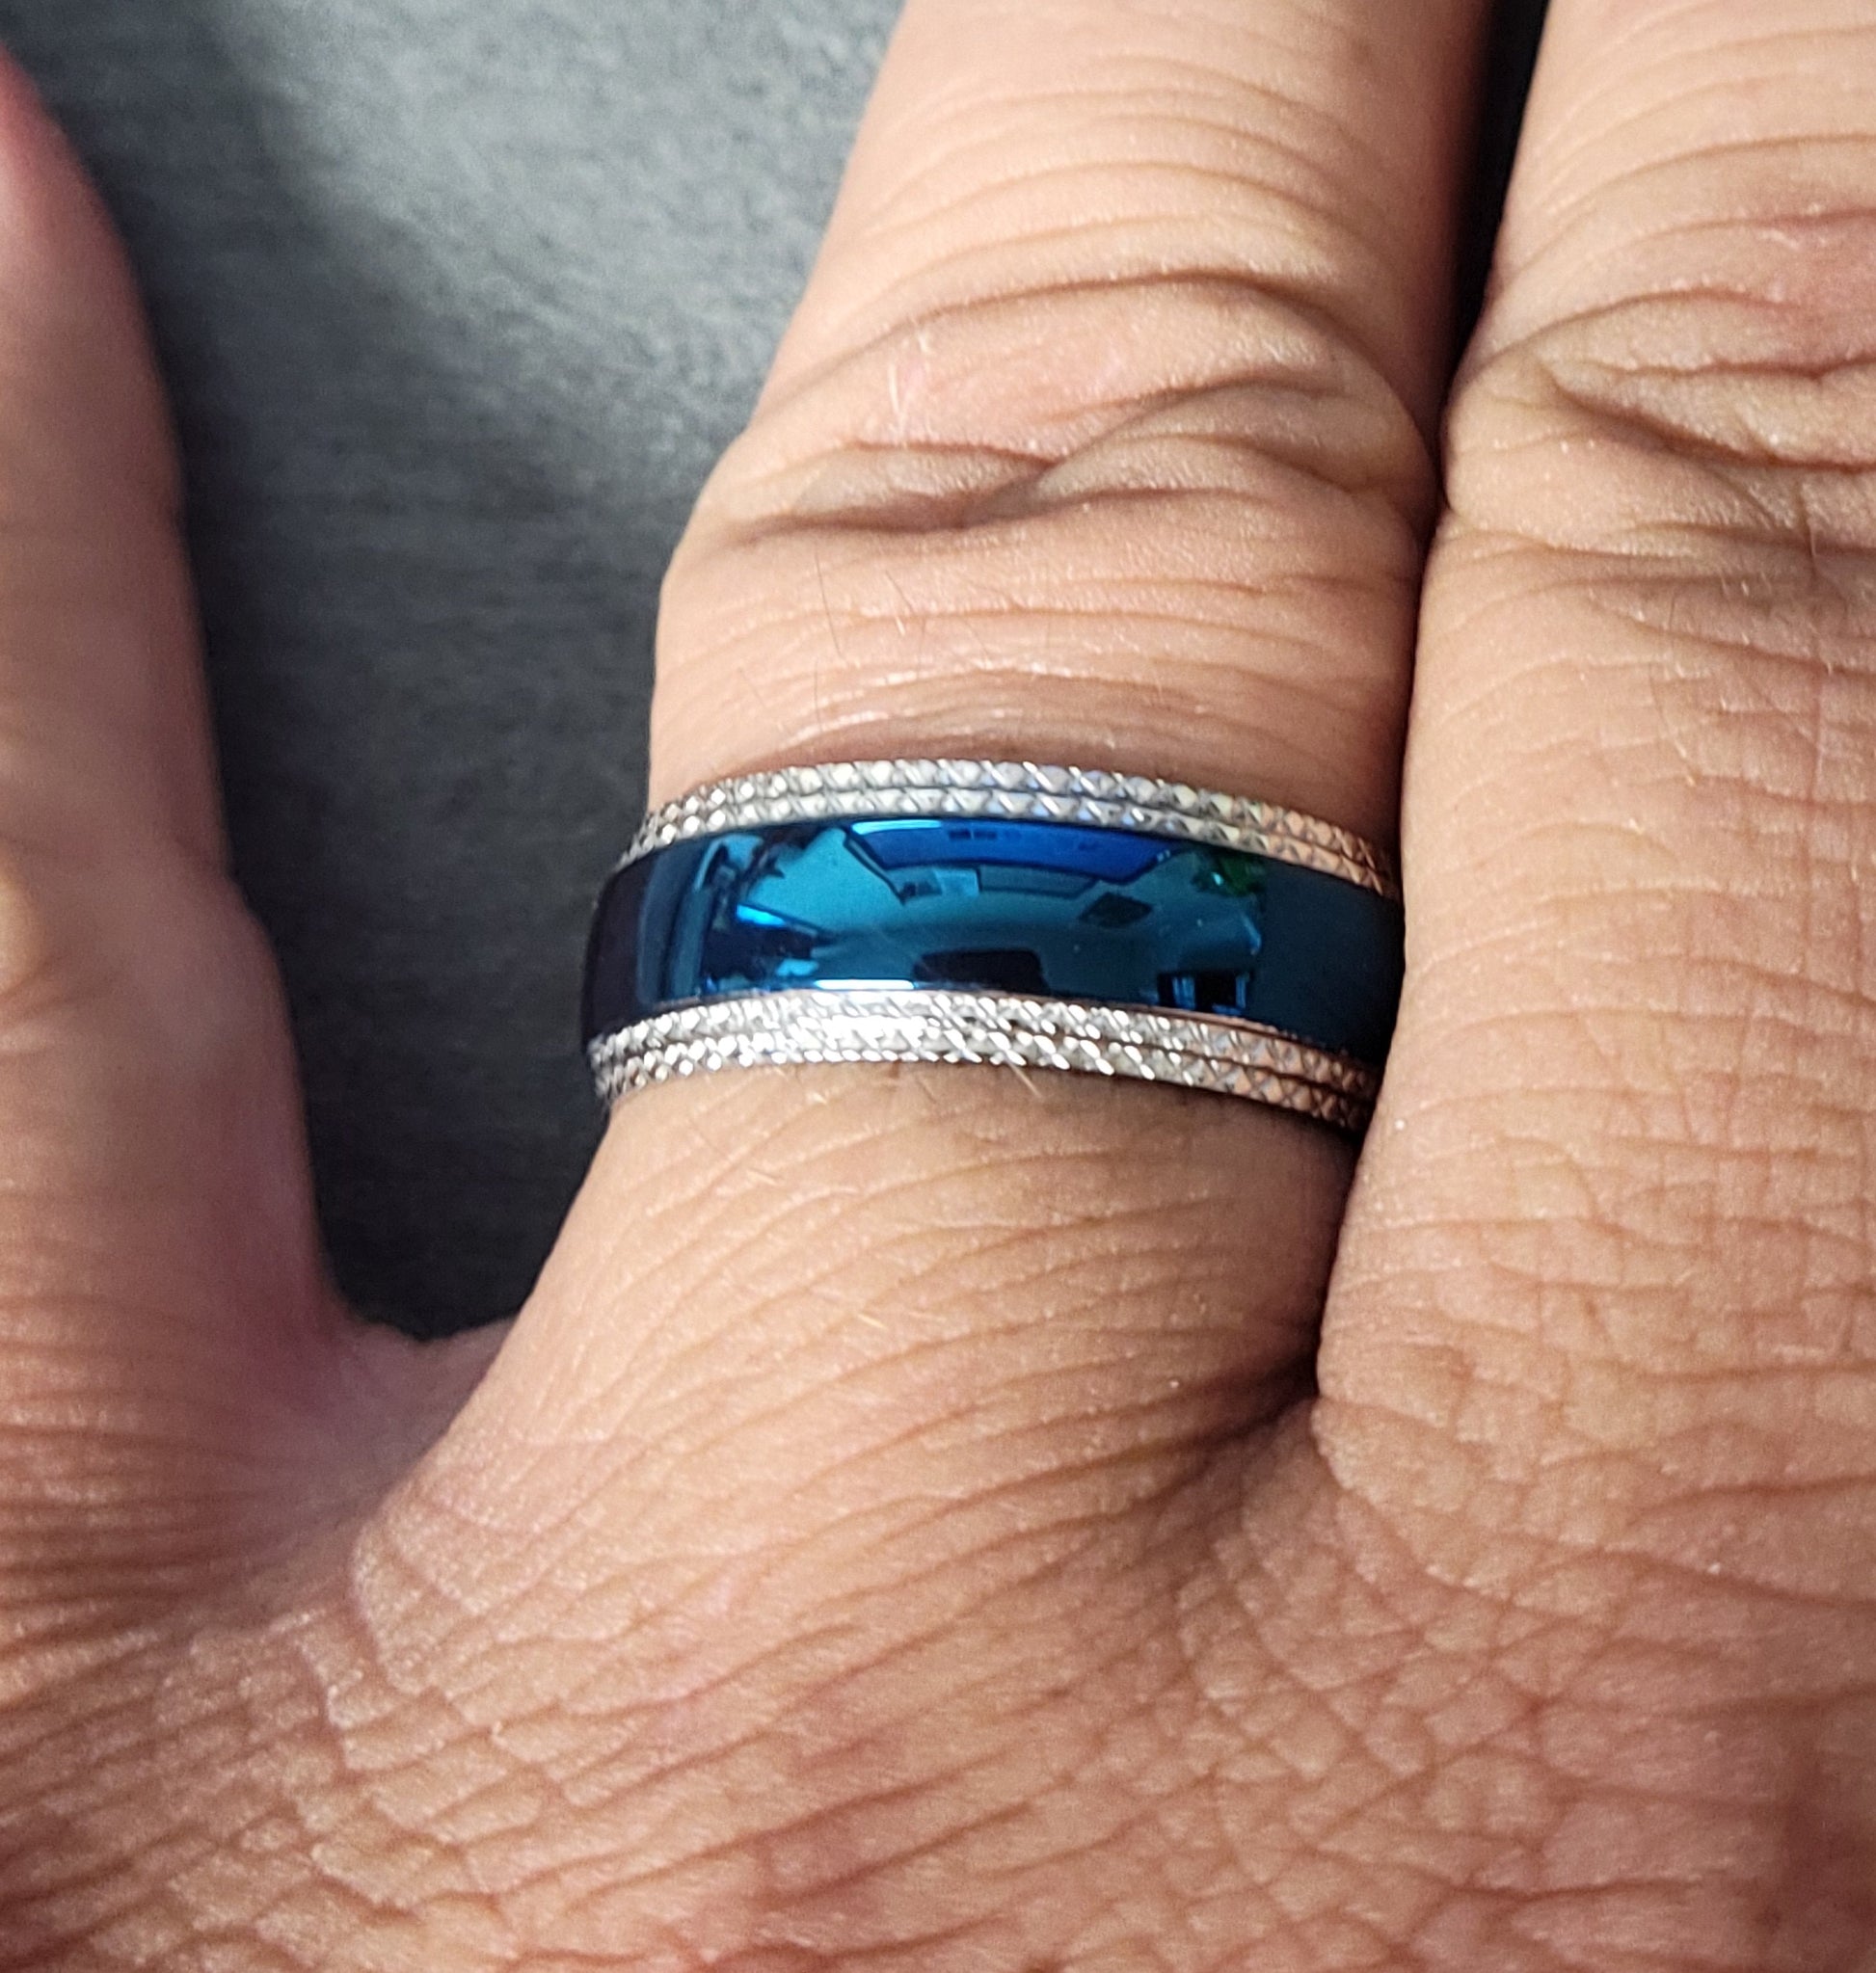 Think Engraved wedding Band Custom Engraved Man's Blue Wedding Ring - Personalized wedding Ring For Guys